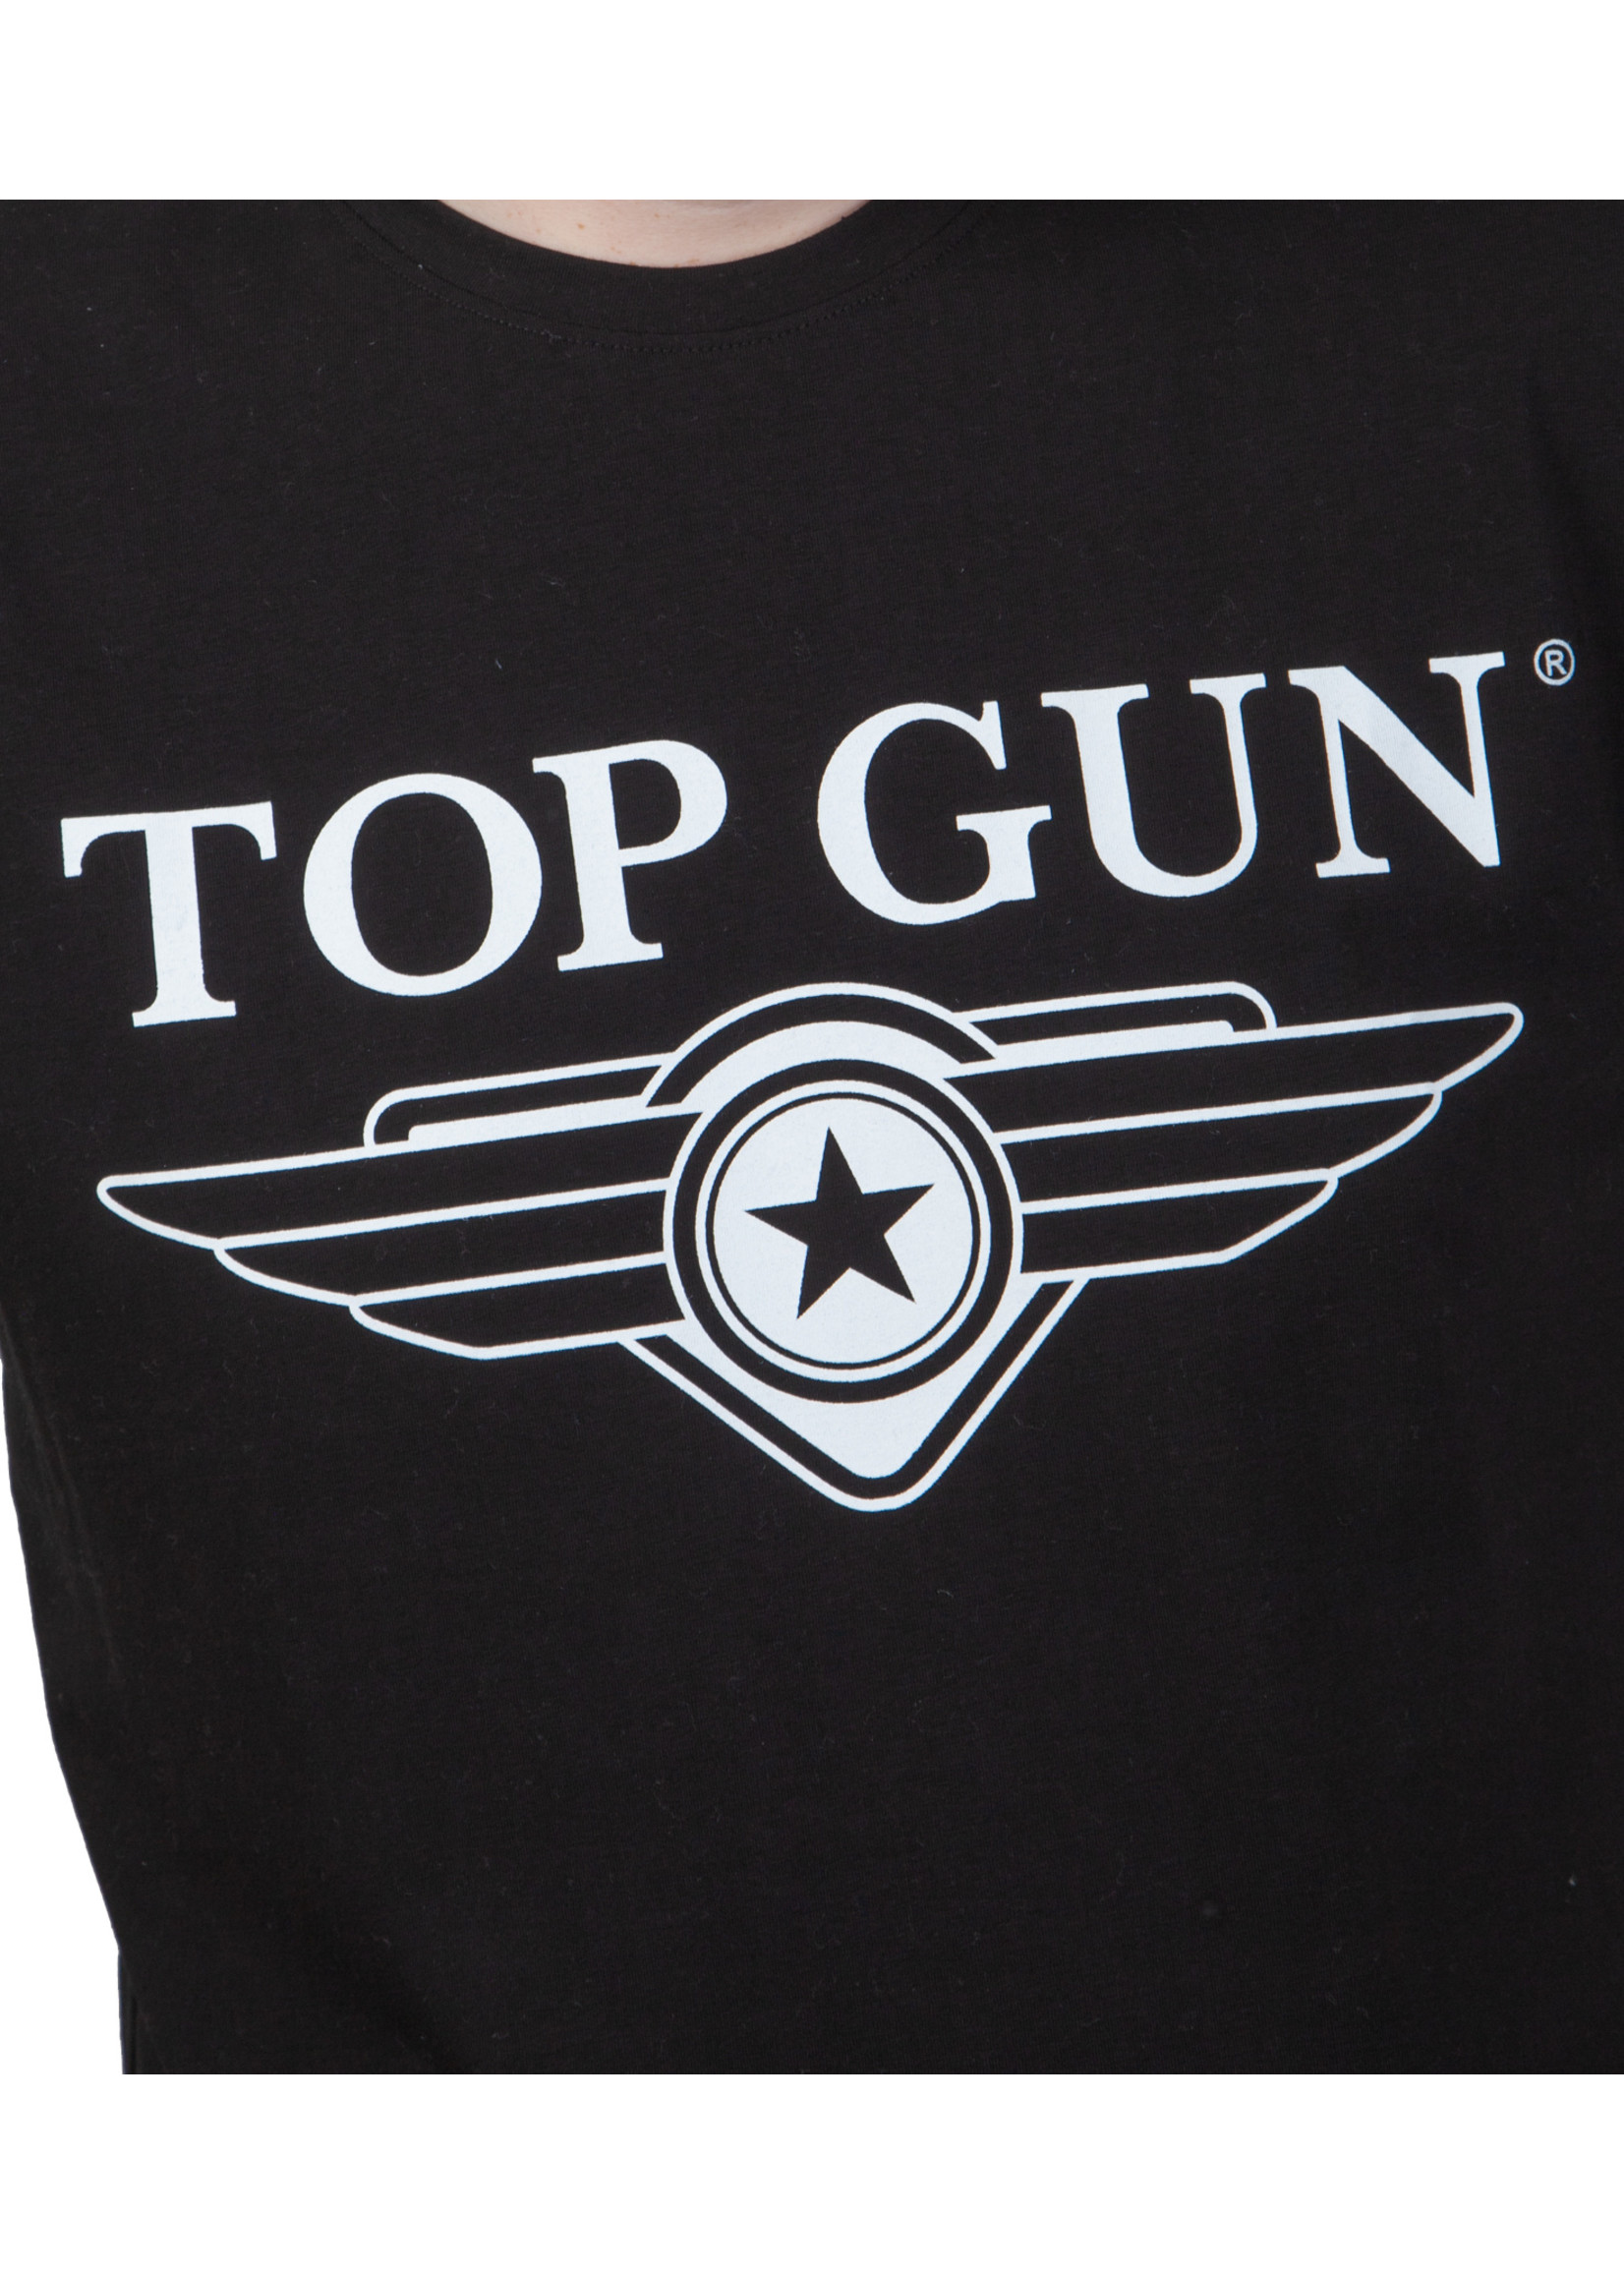 Top Gun Top Gun® "Cloudy" T-Shirt, Black